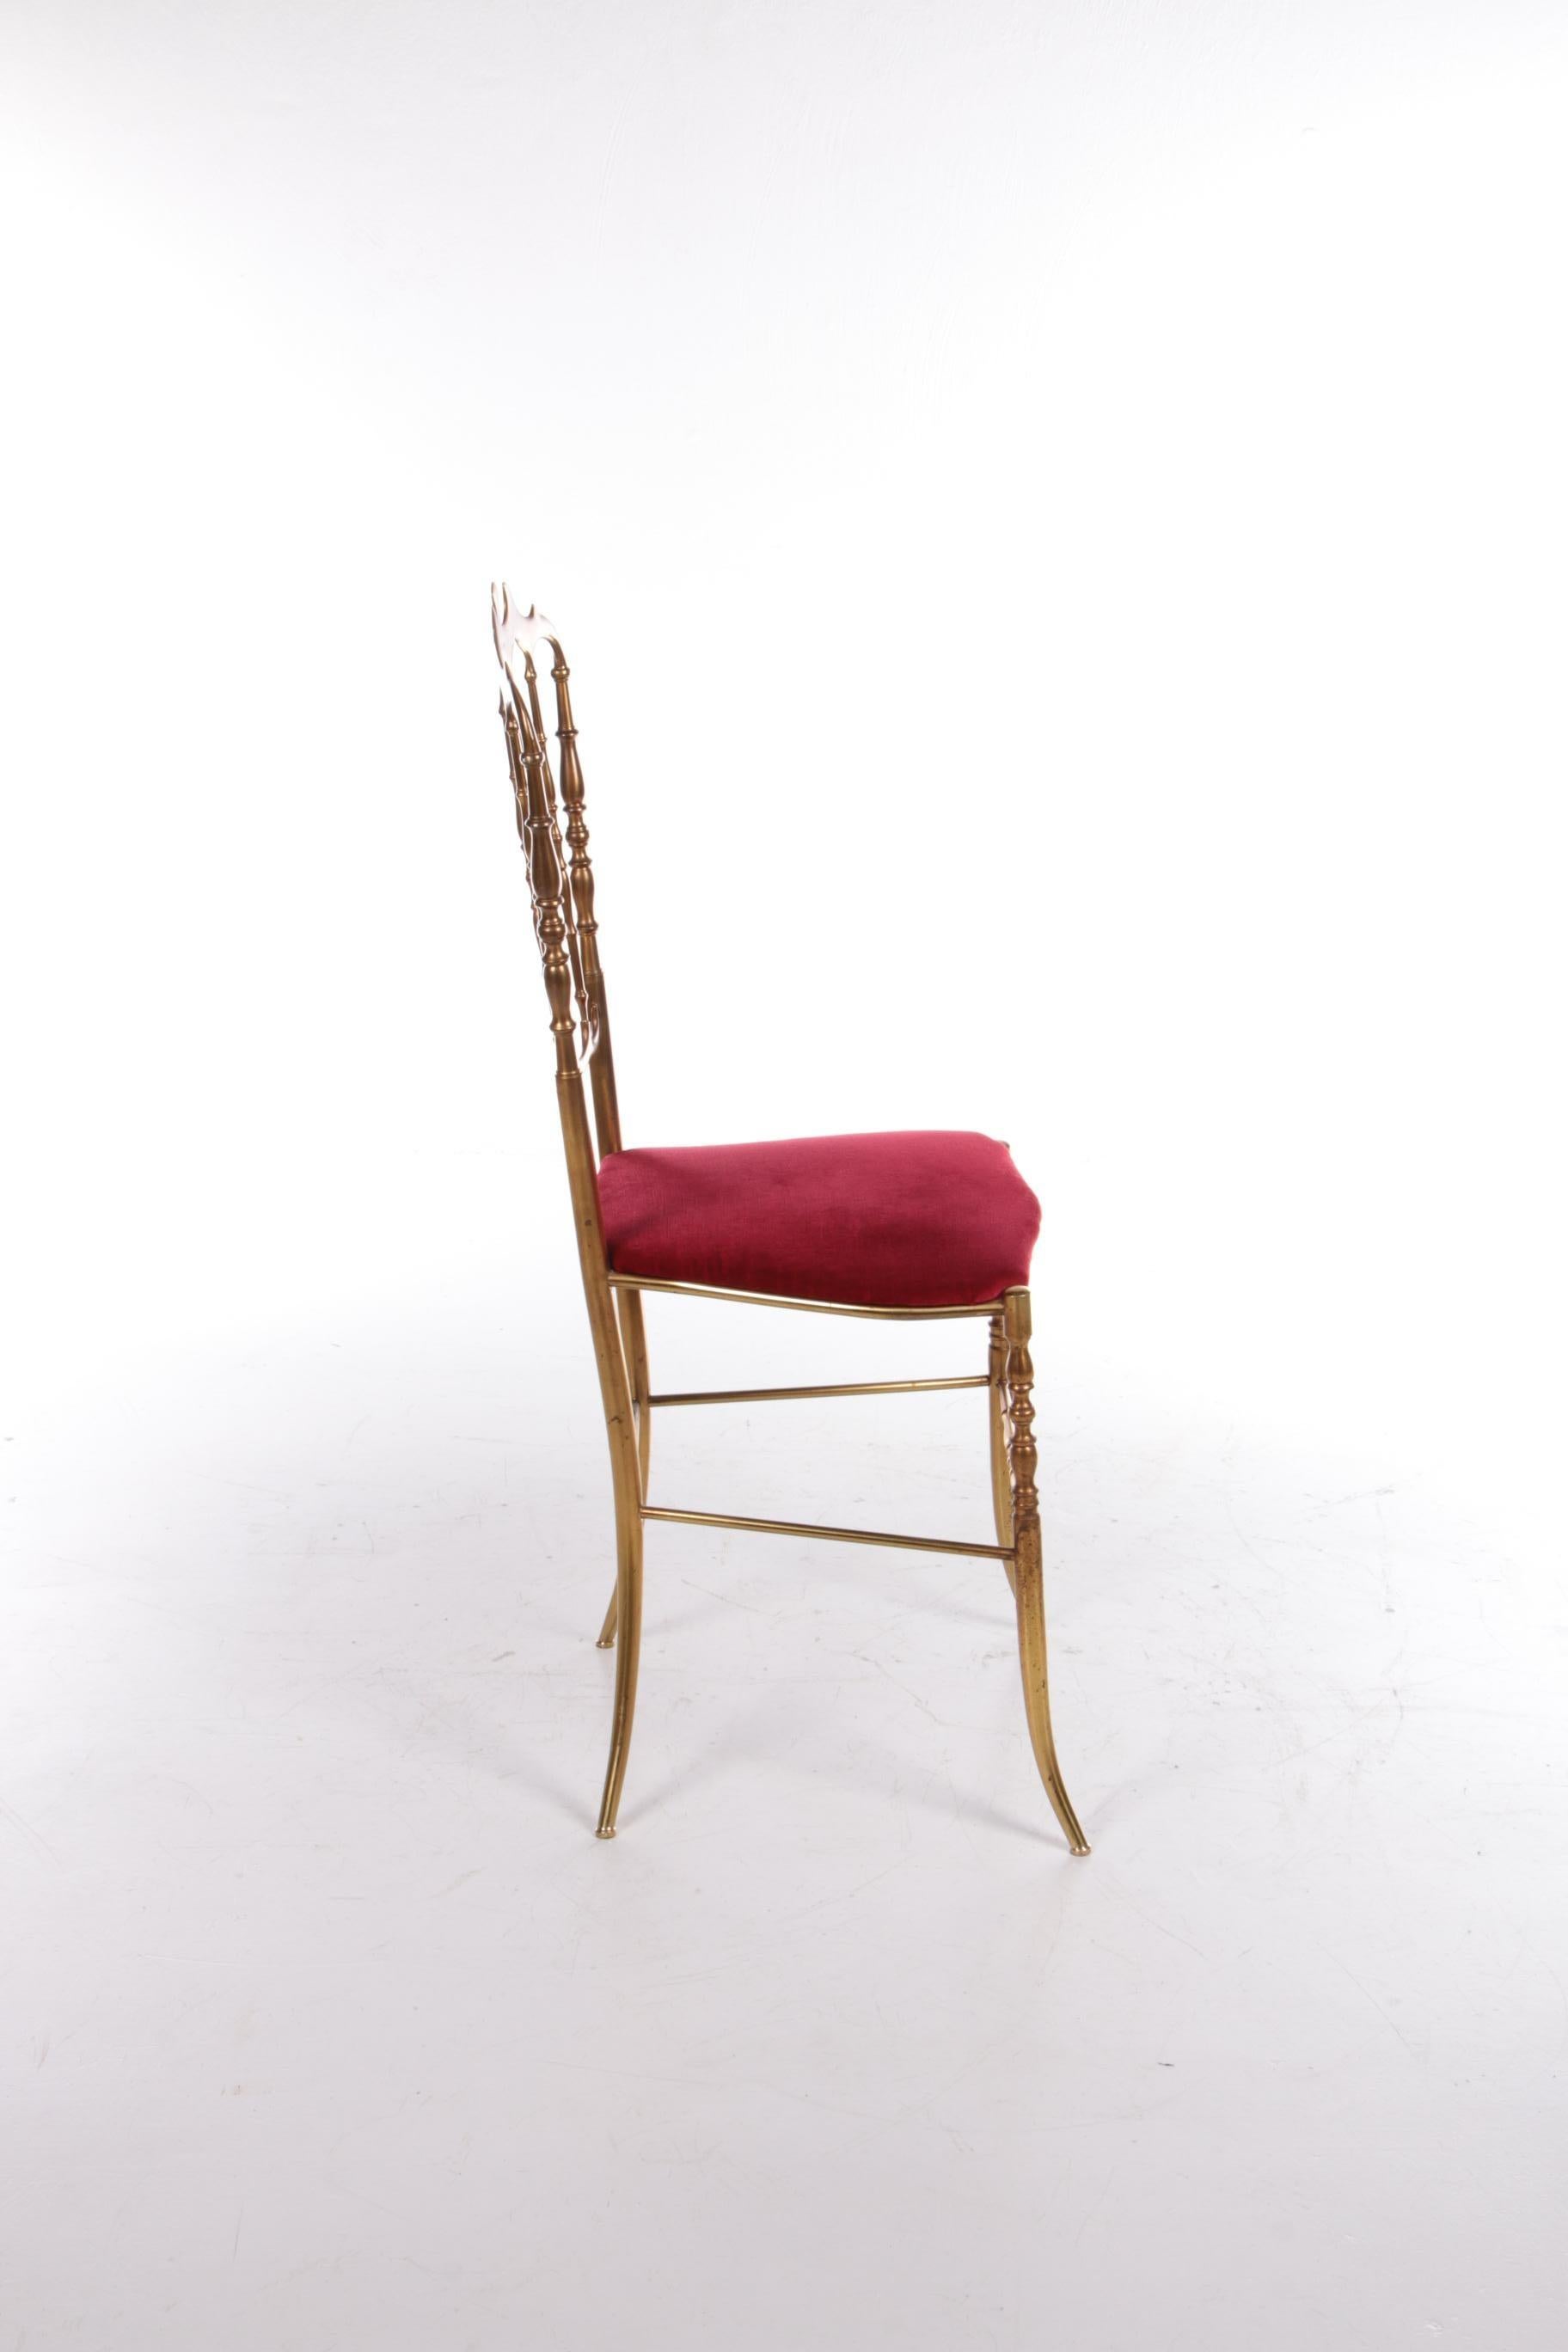 Brass Italian Design Side Chair by Giuseppe Gaetano Descalzi for Chiavari, Italy 1950